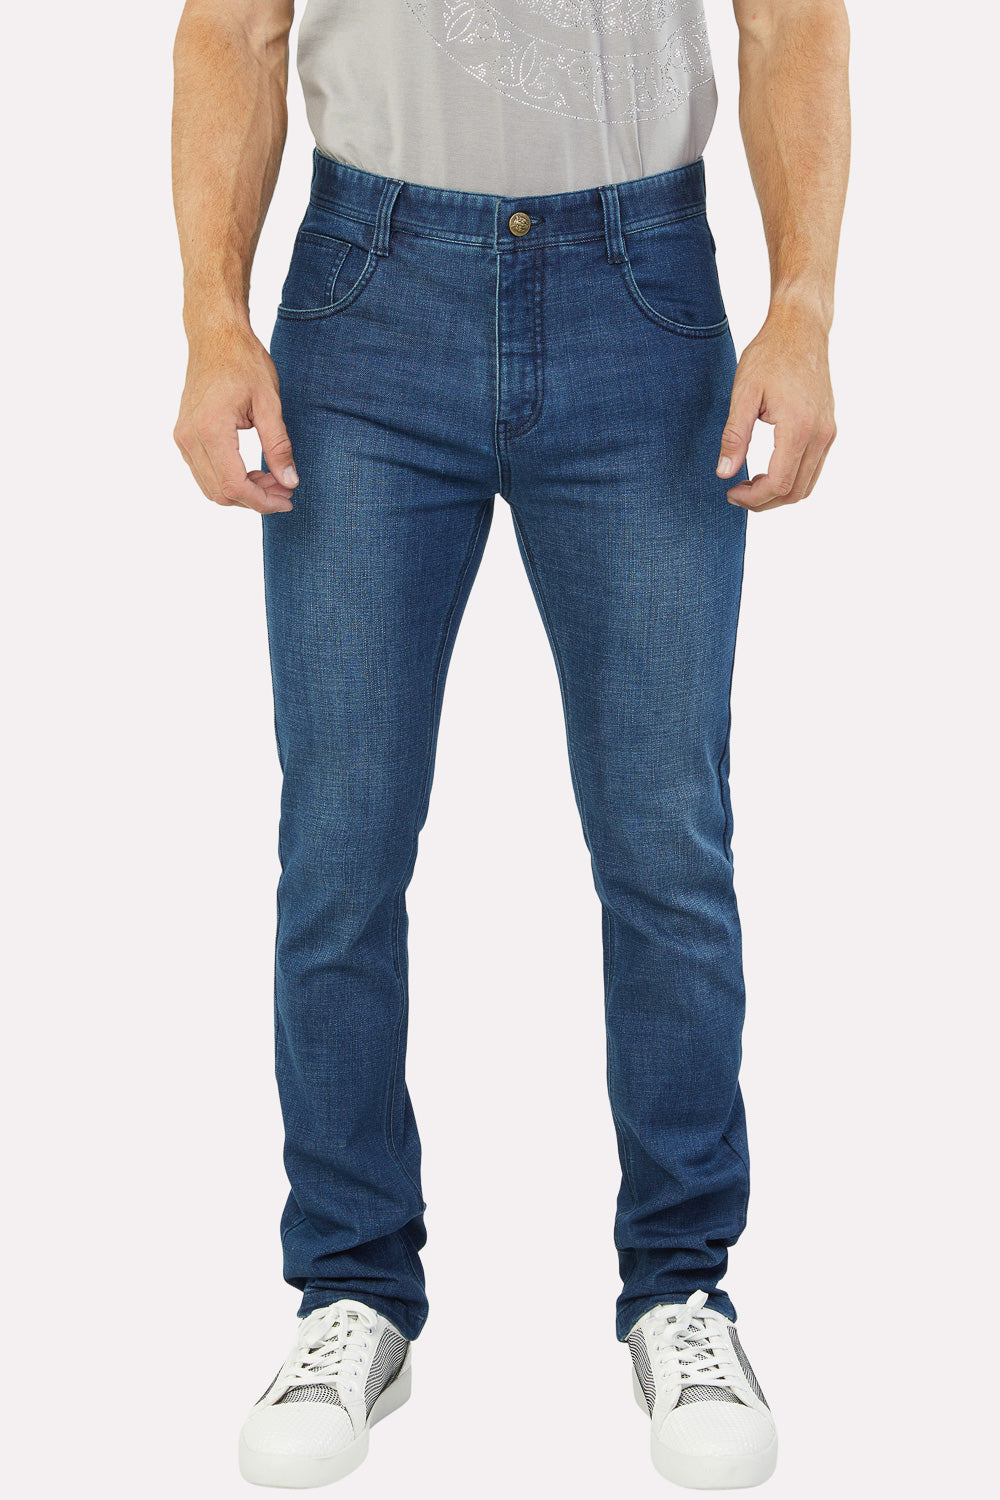 Cruz Men's Supersoft Denim Blue Stretch Slim Jeans